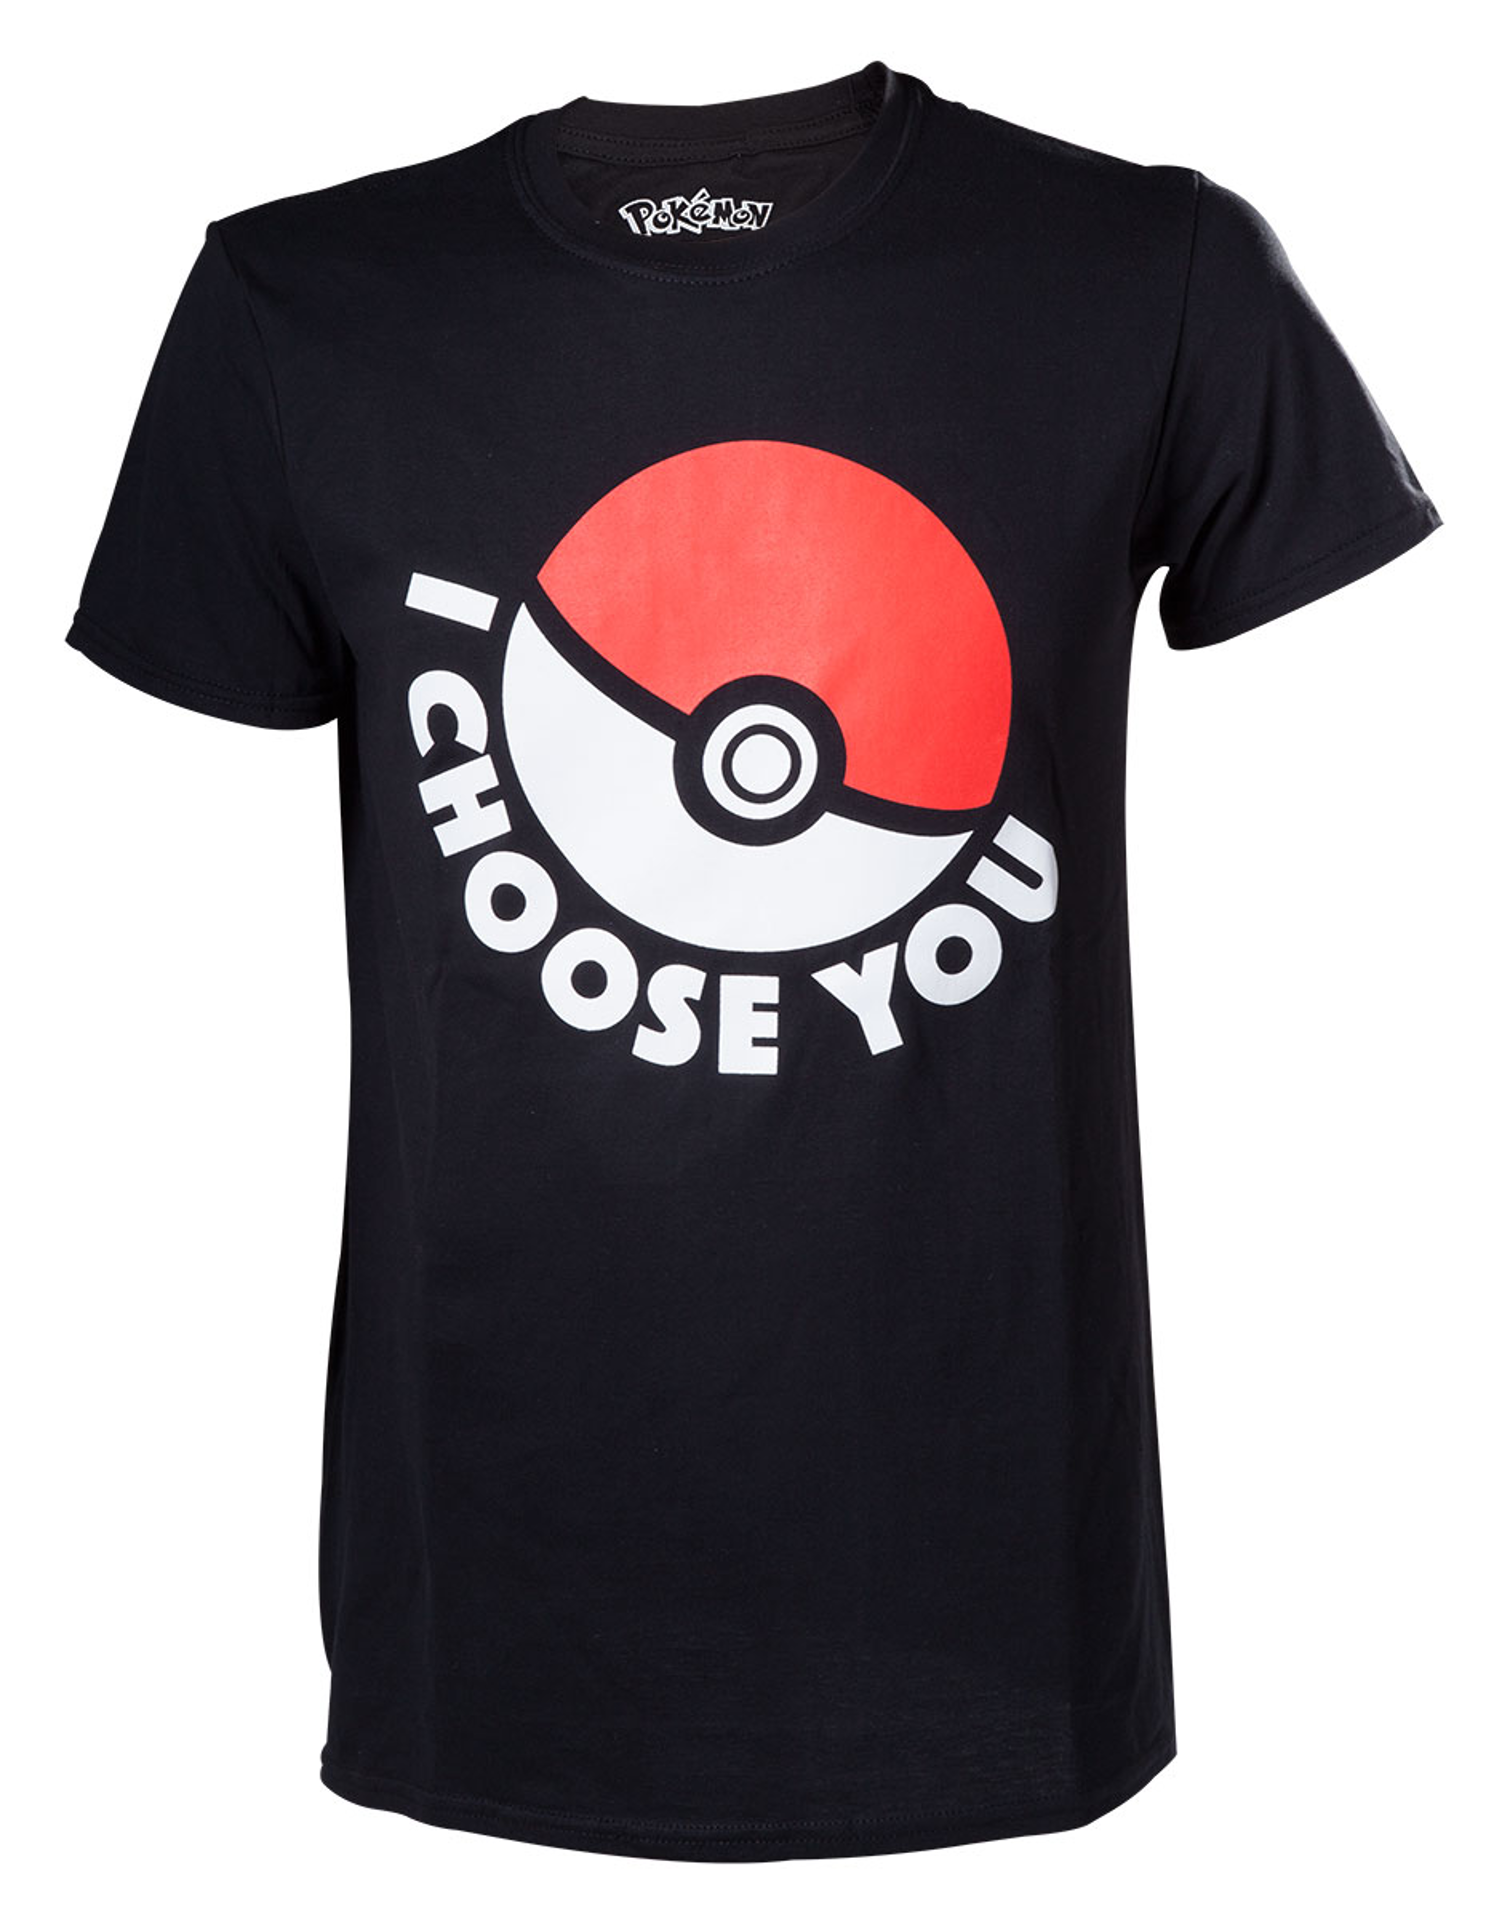 Pokémon - I Choose You Black T-Shirt - M